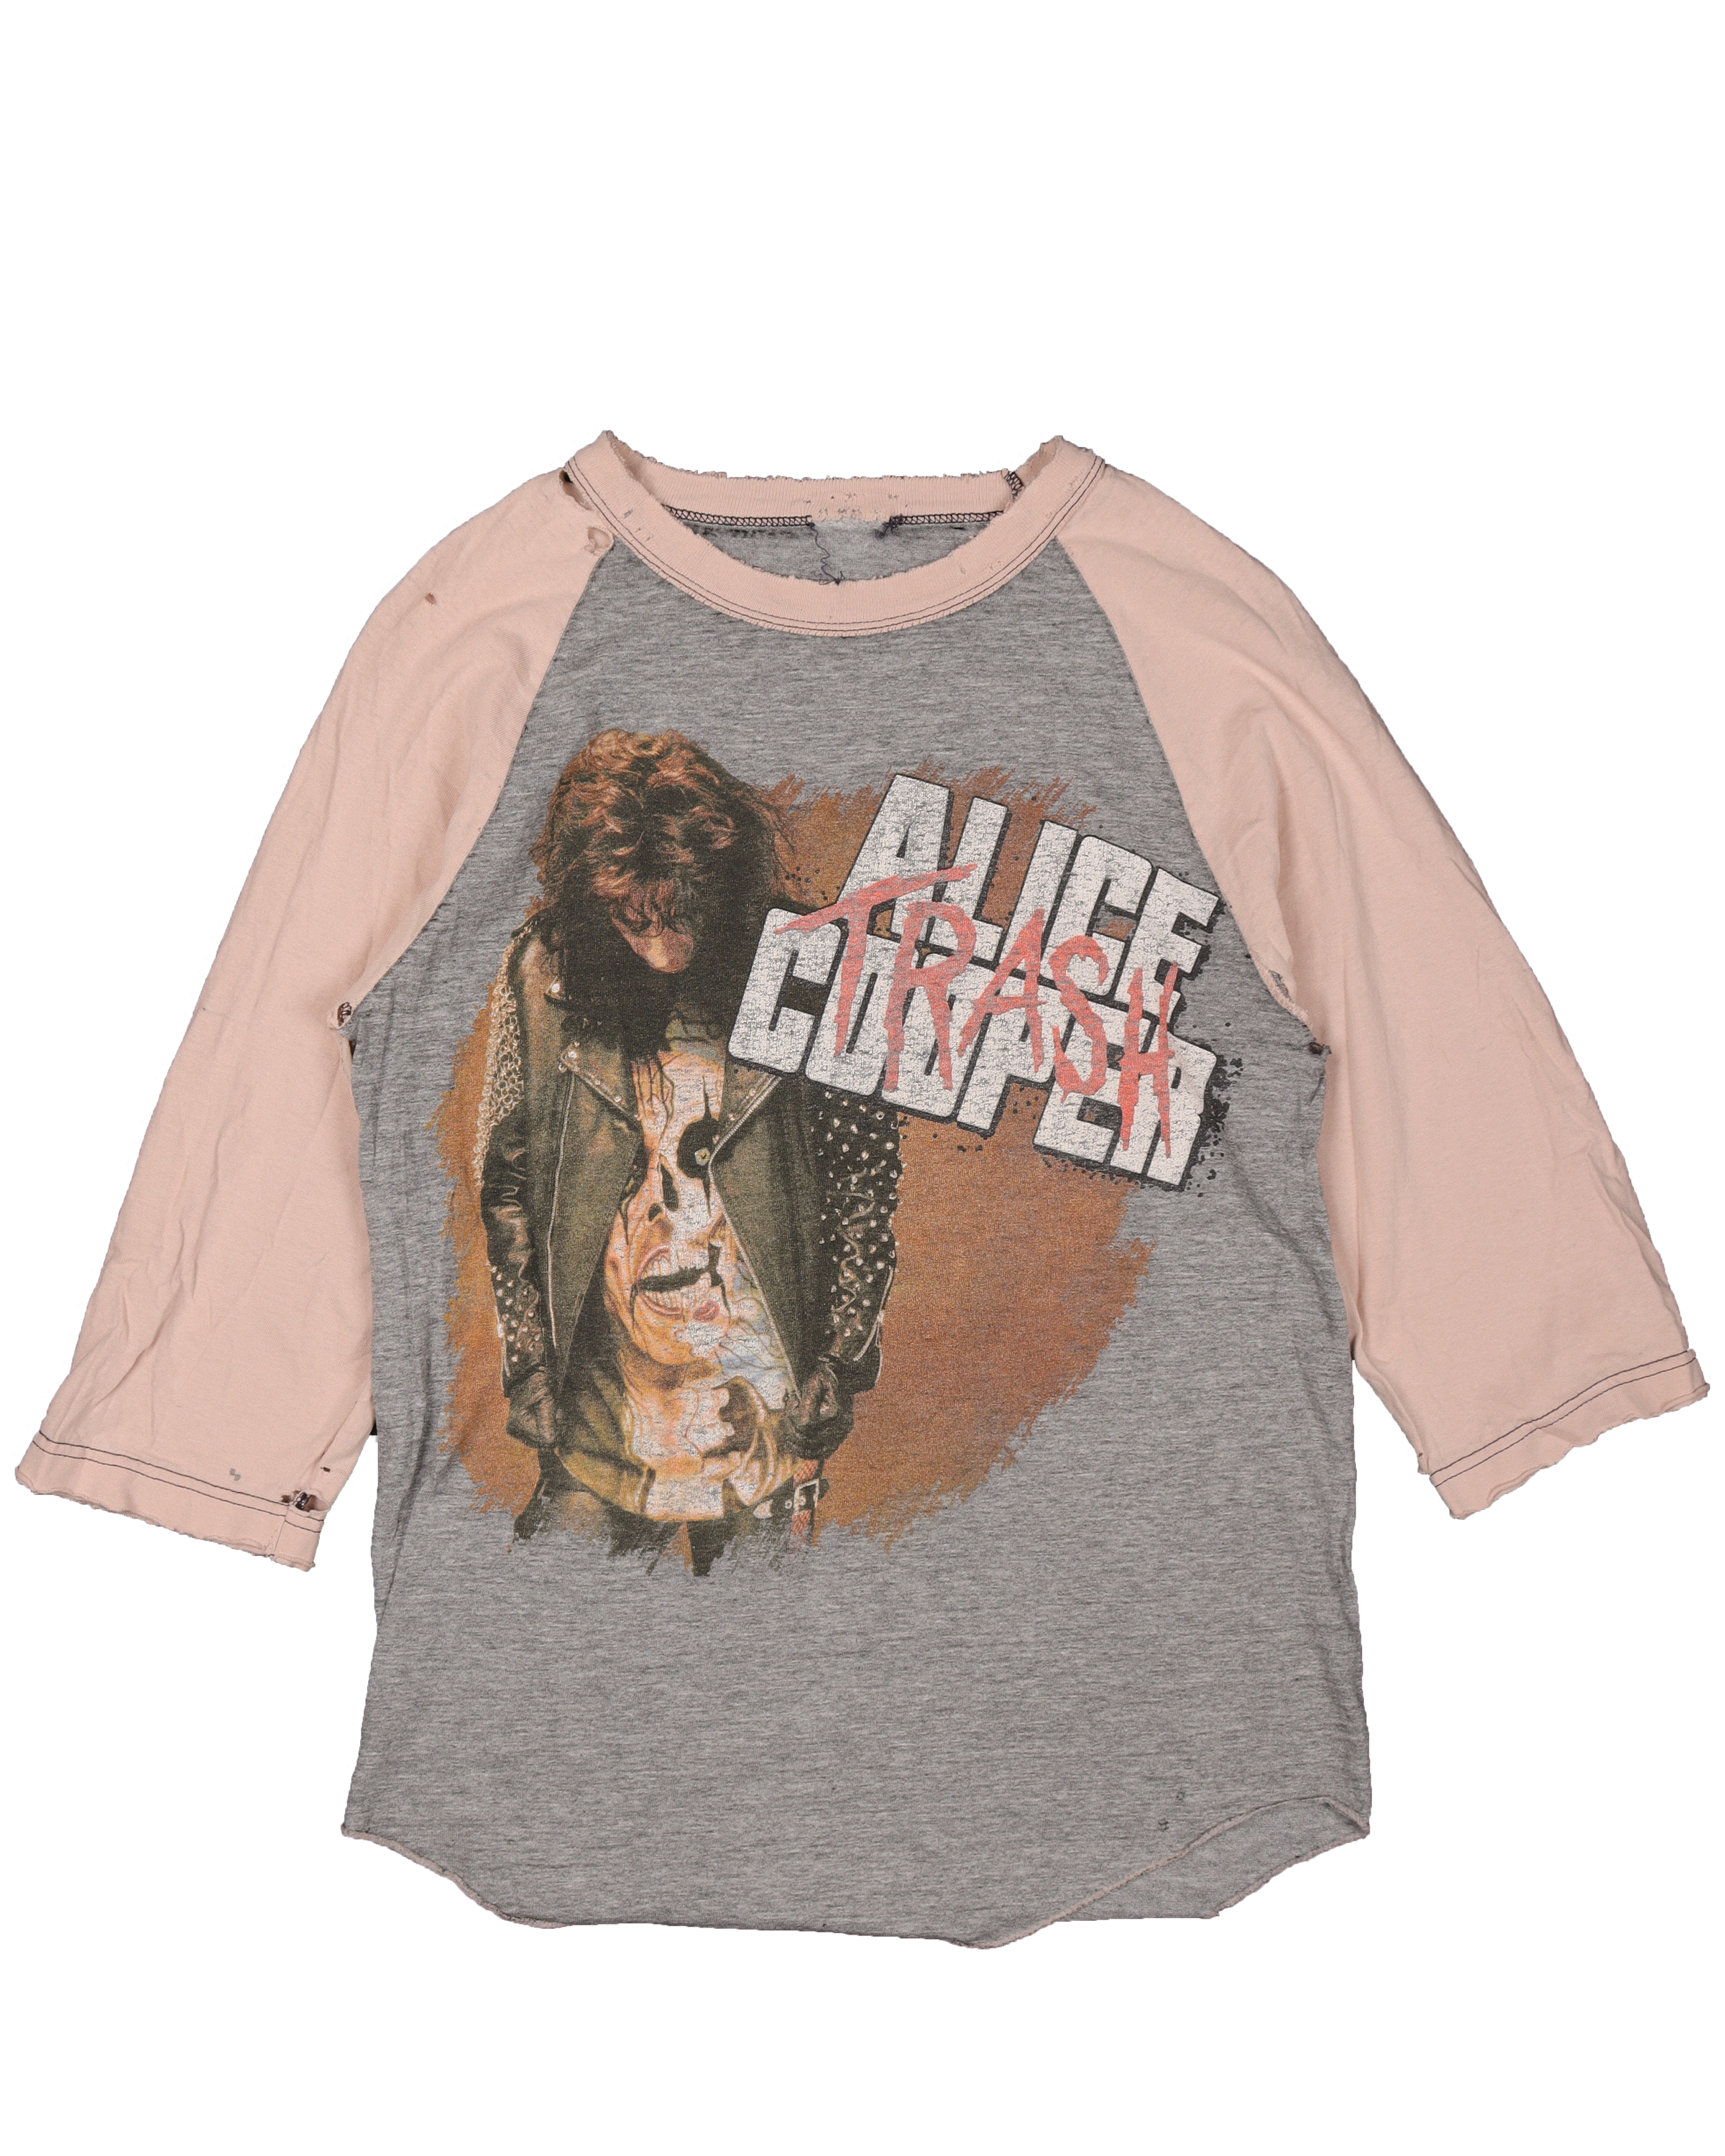 Alice Cooper "Trash" Ringer T-Shirt